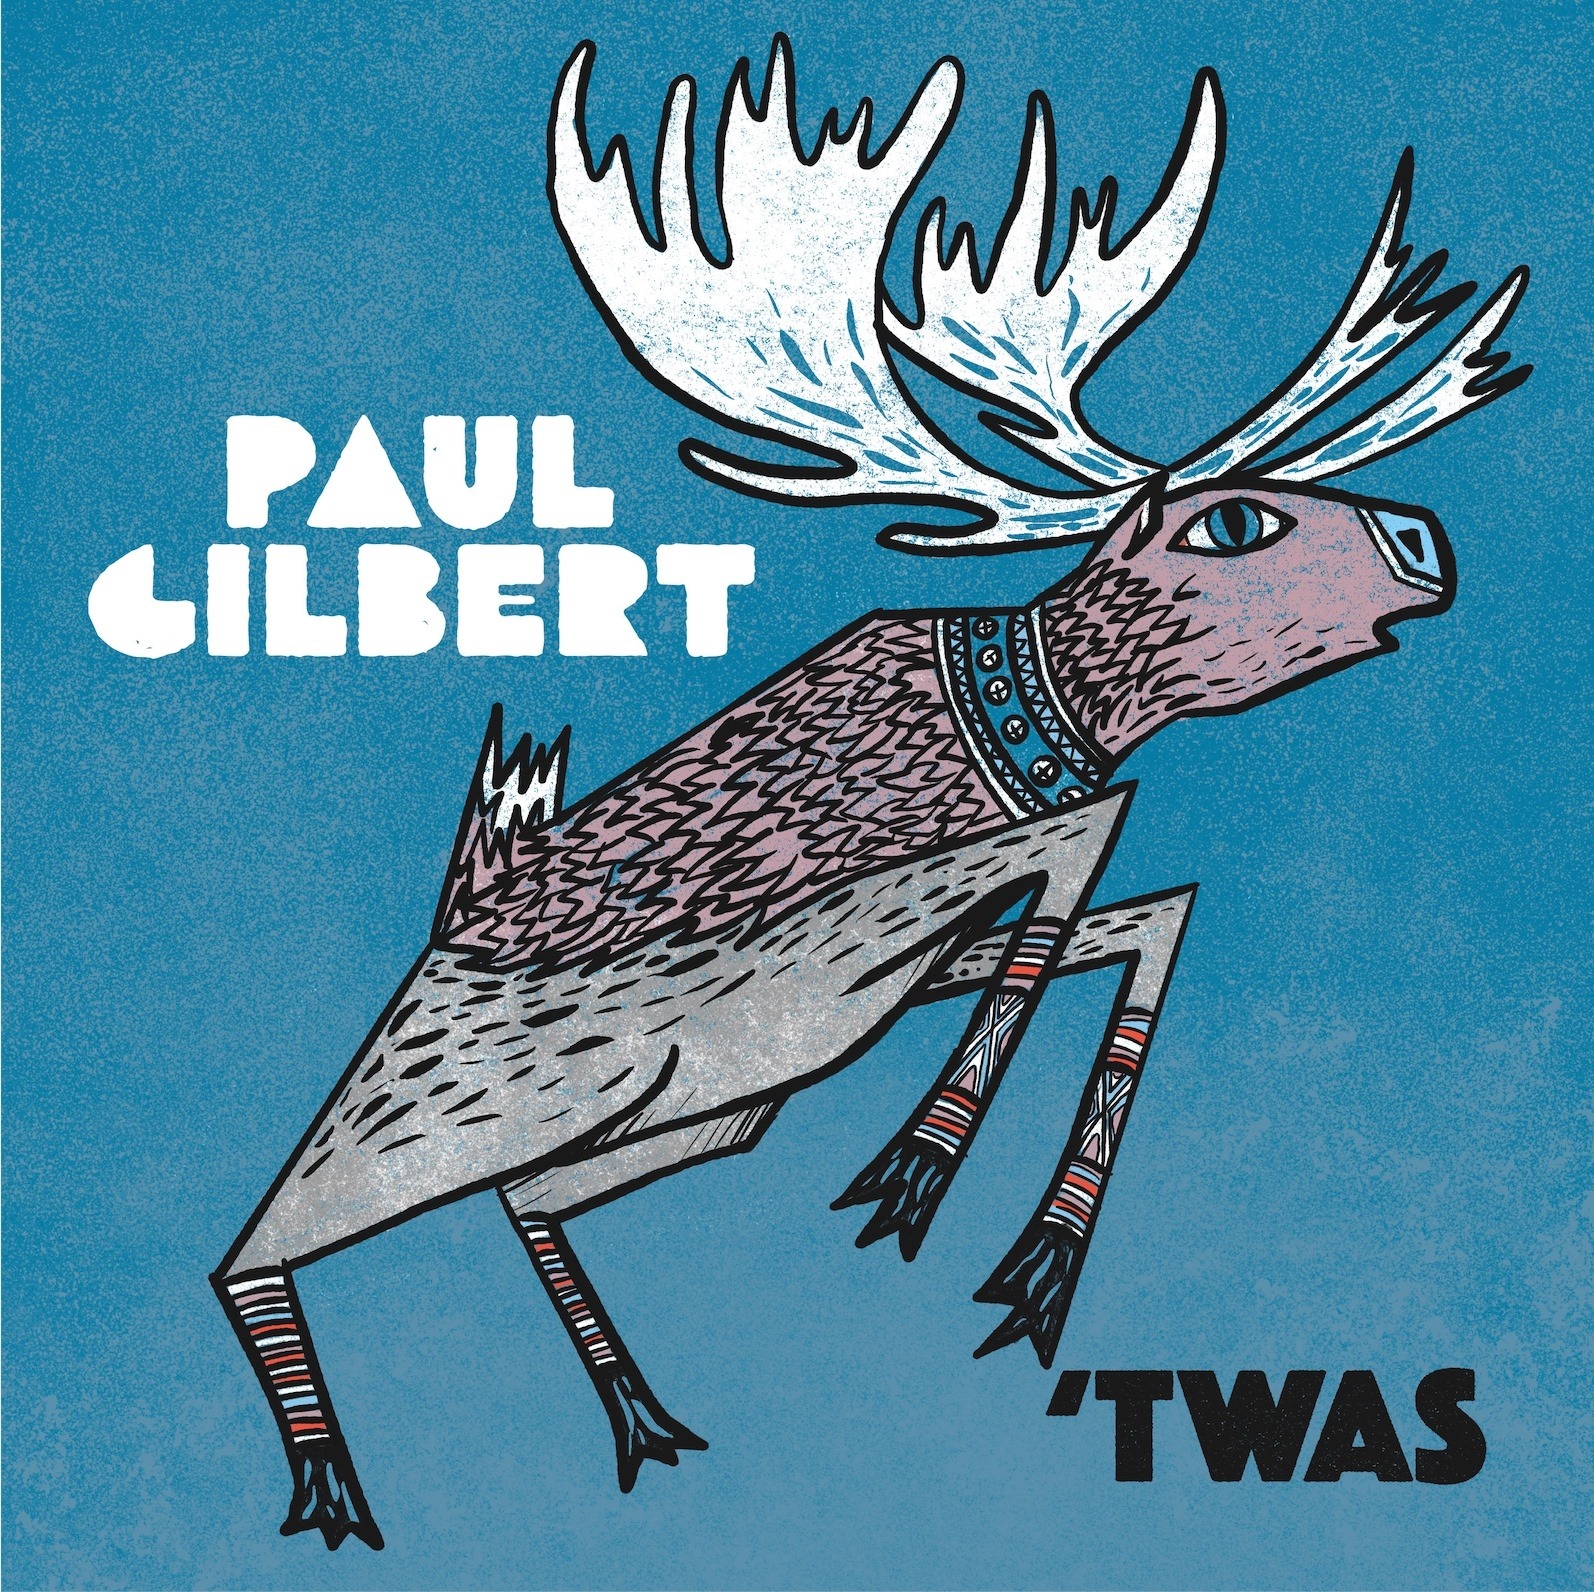 NY VIDEO: Paul Gilbert - Every Christmas Has Love 4